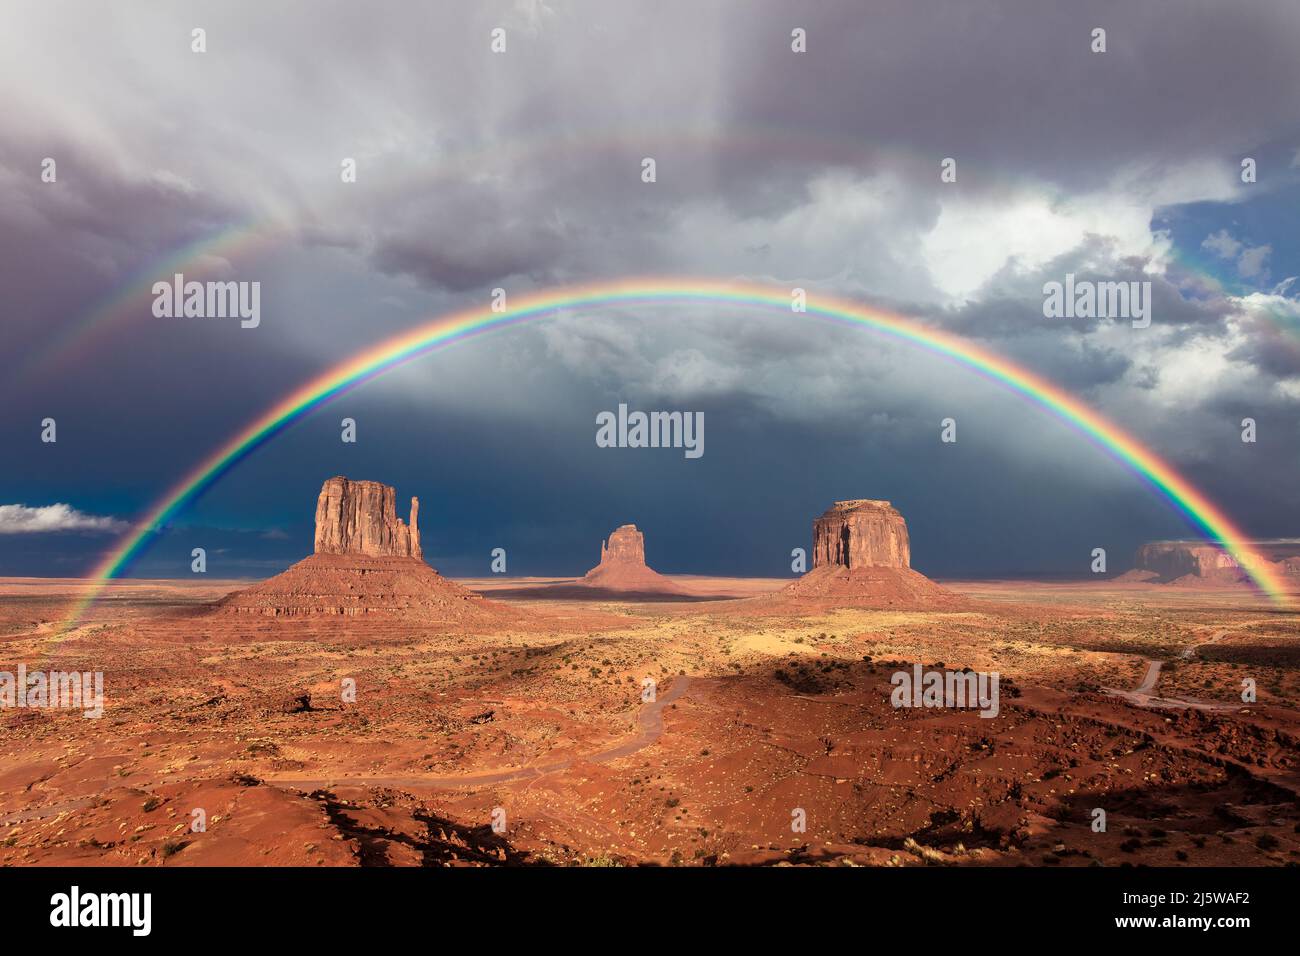 Double rainbow over Monument Valley, Arizona, USA Stock Photo